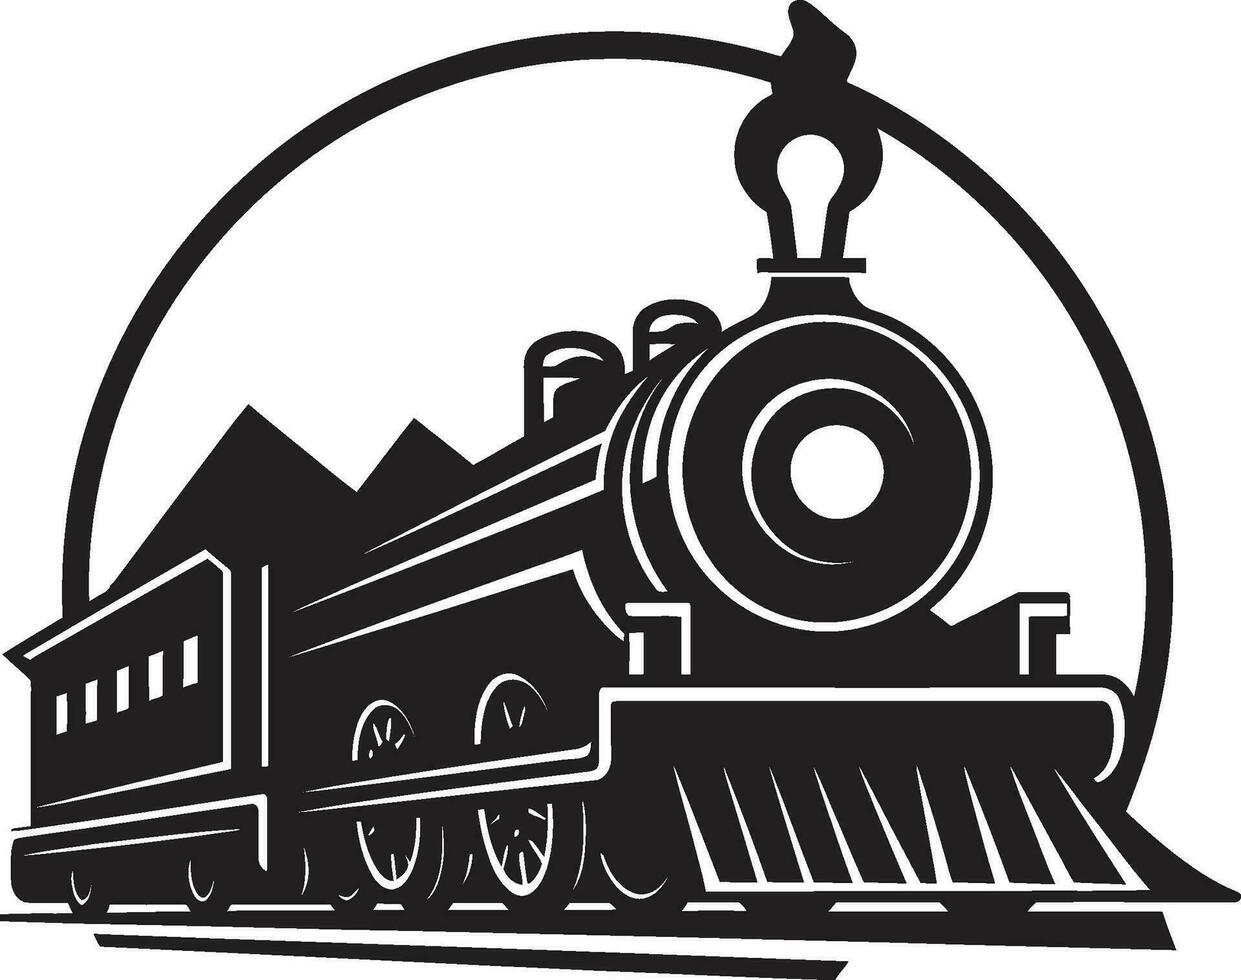 arv tåg rutt vektor design antik järnväg väg svart ikon